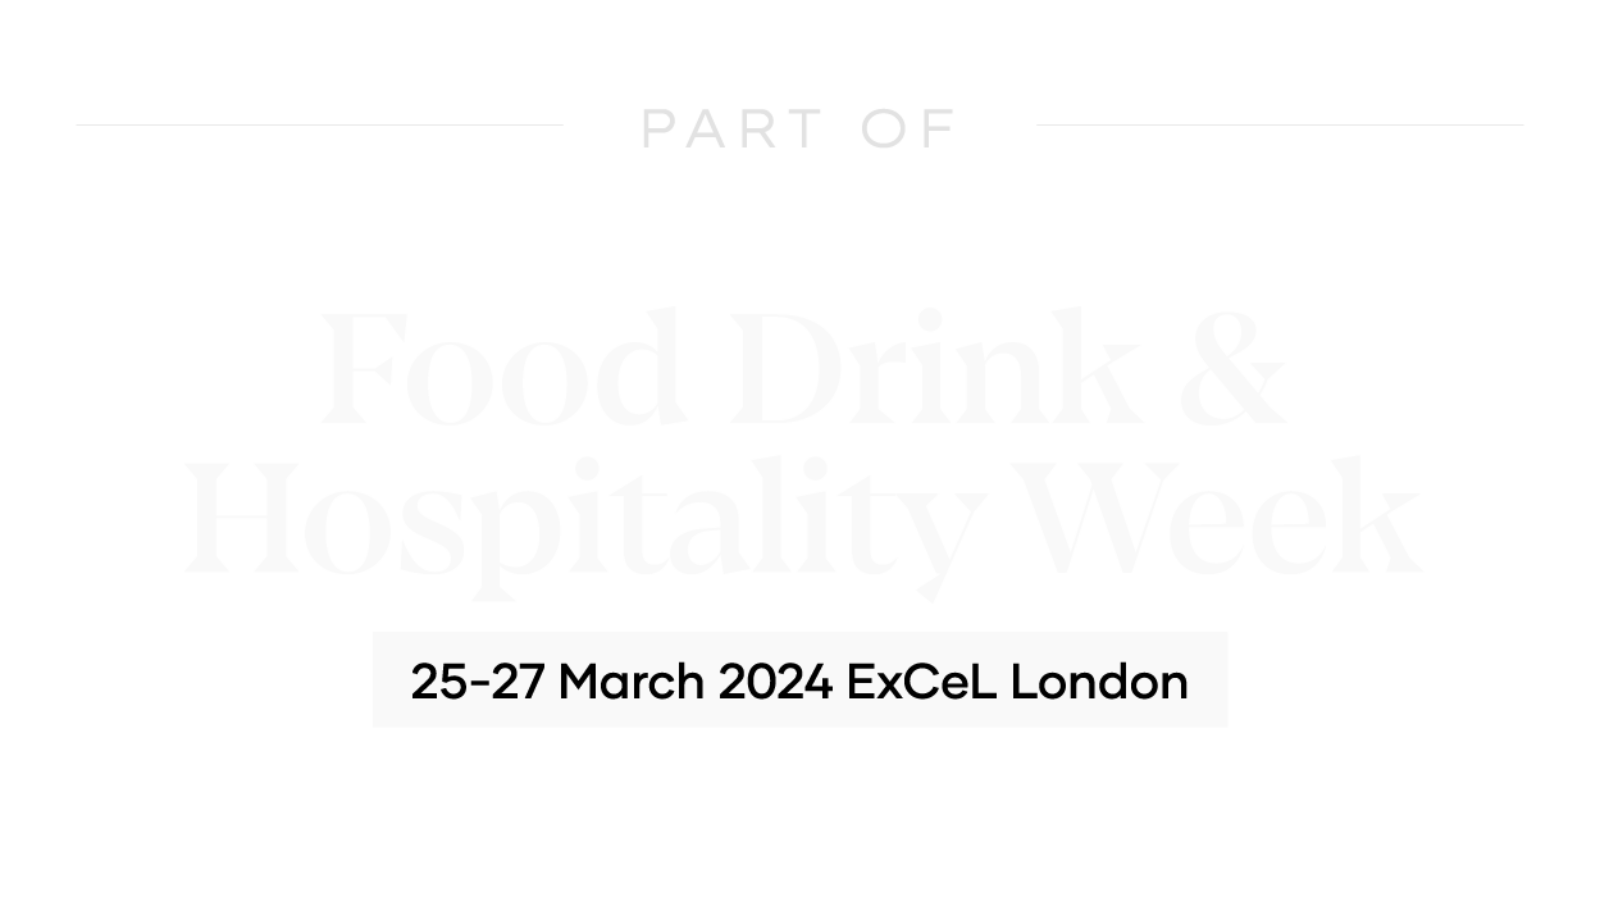 Food, Drink & Hospitality Week